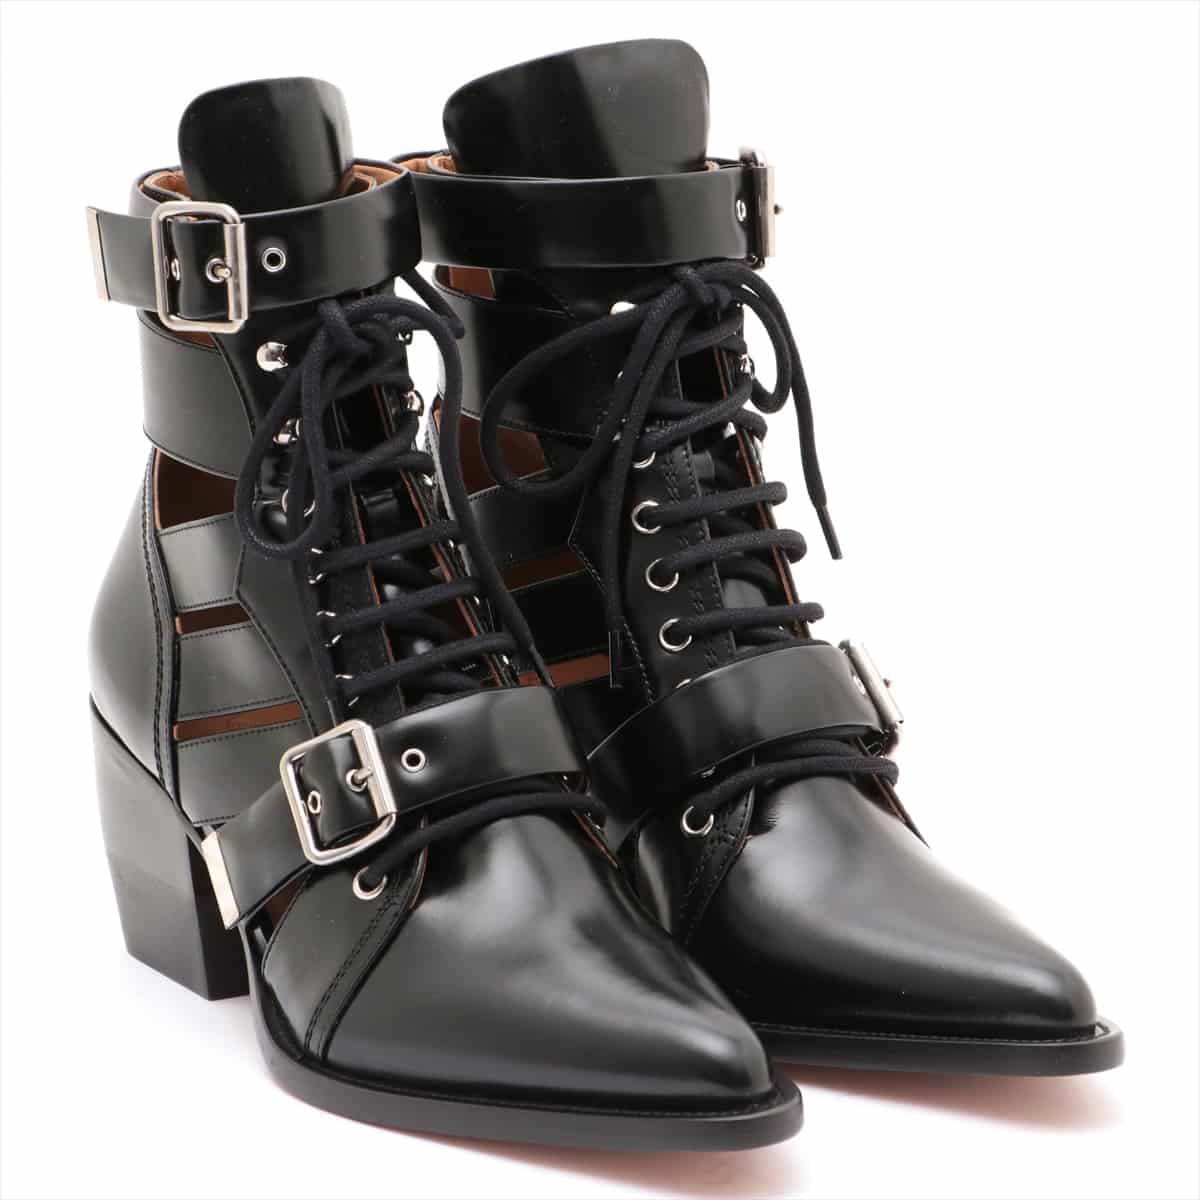 Chloe Leather Boots 41 Ladies' Black